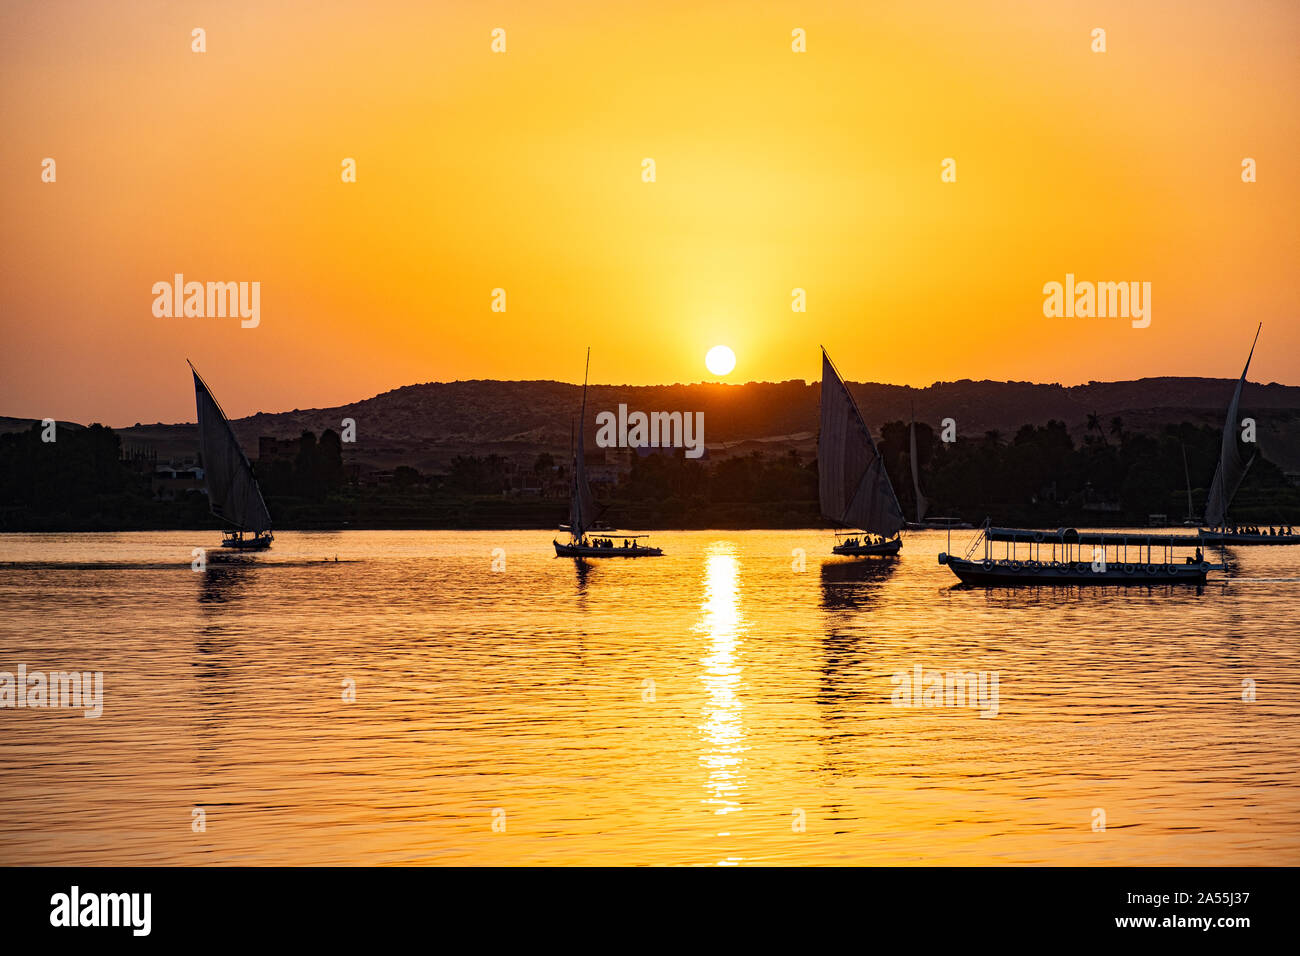 Felukka sailing boats on the Nile river near Assuan, Egypt. Stock Photo